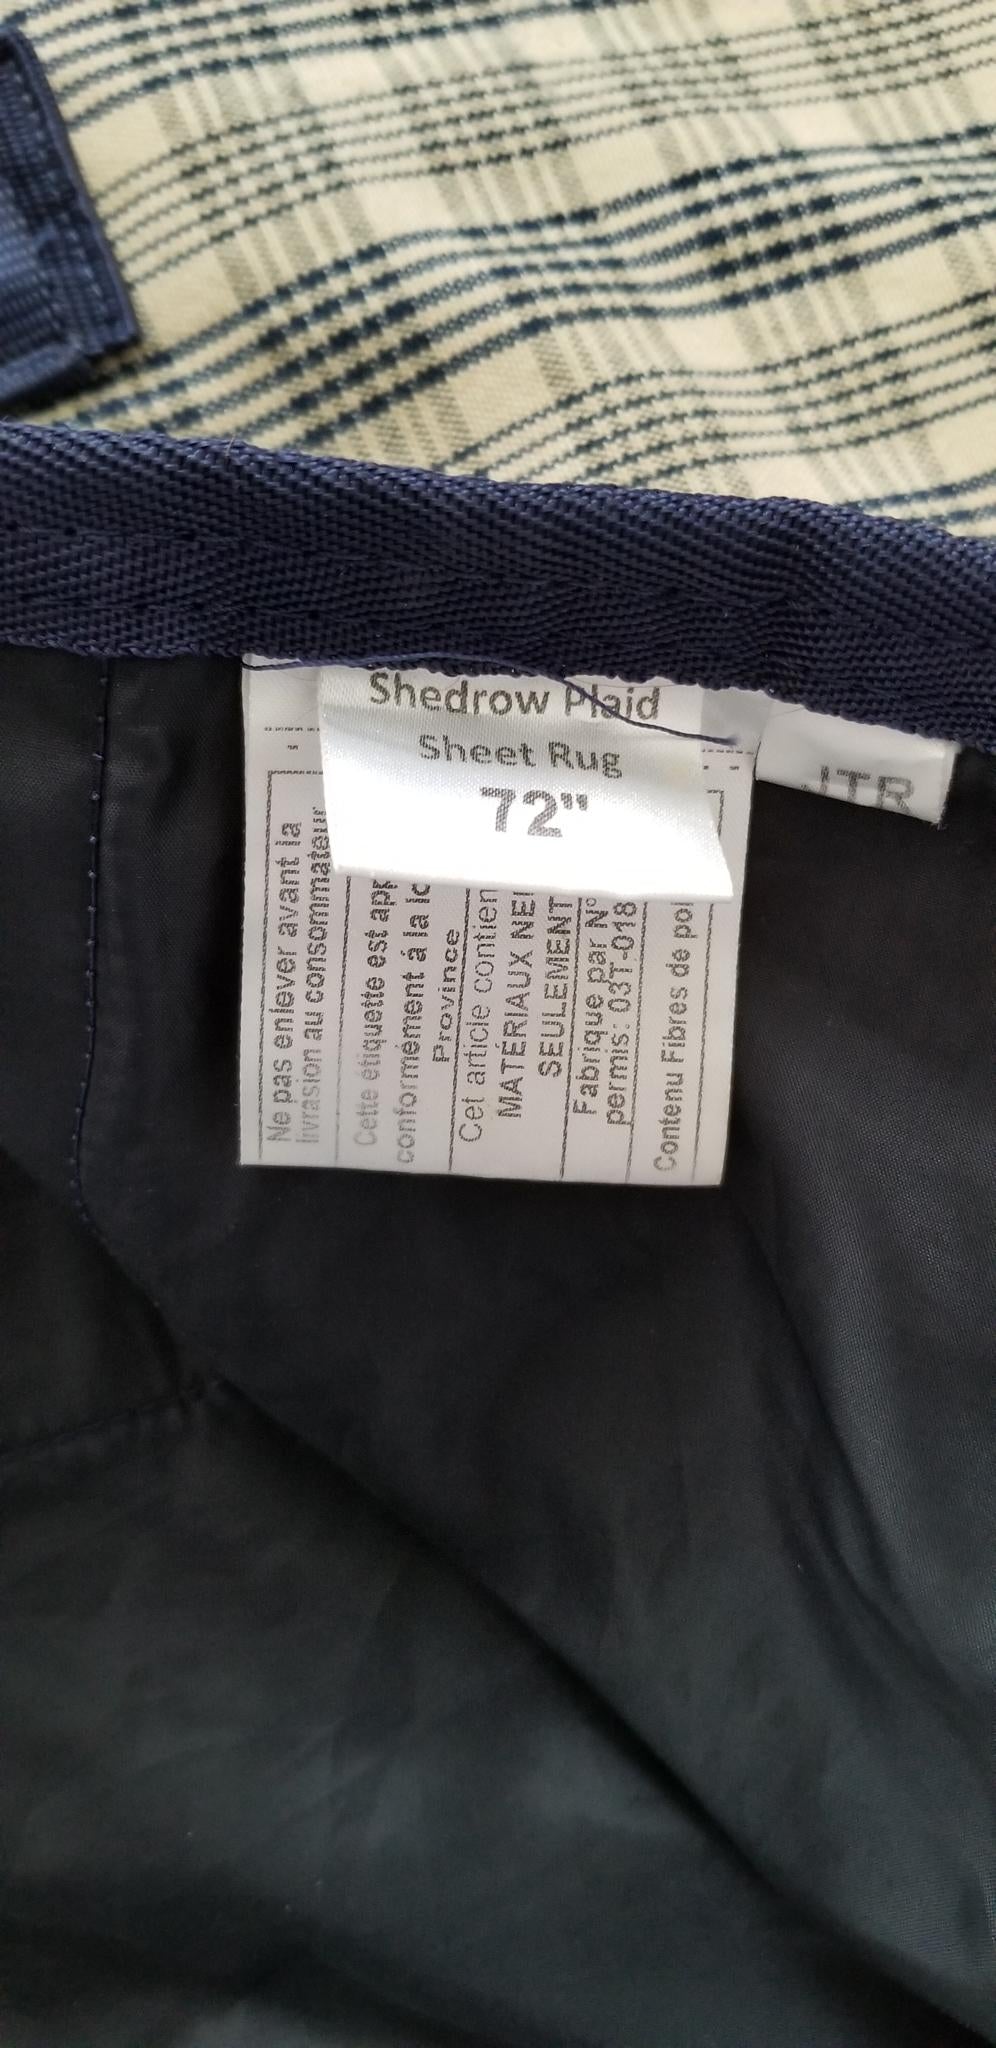 Shedrow Stable Sheet - Plaid - 72"